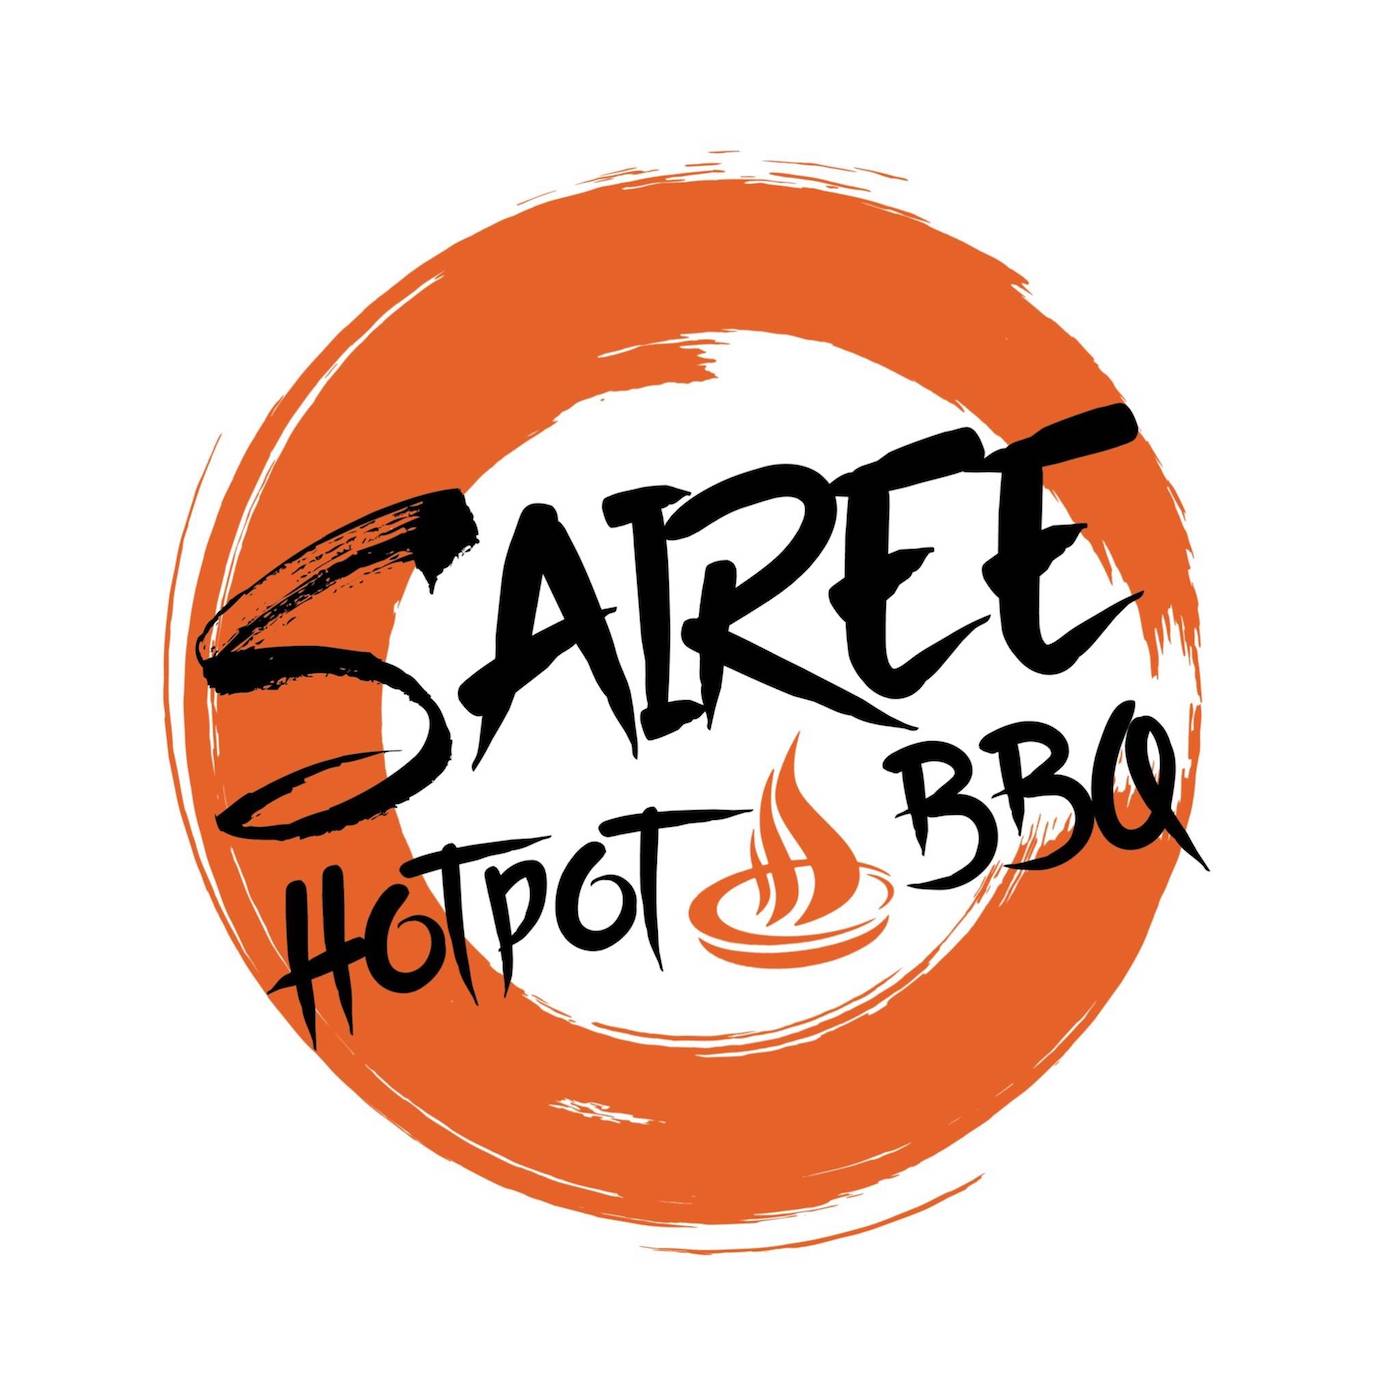 Sairee Hotpot Logo